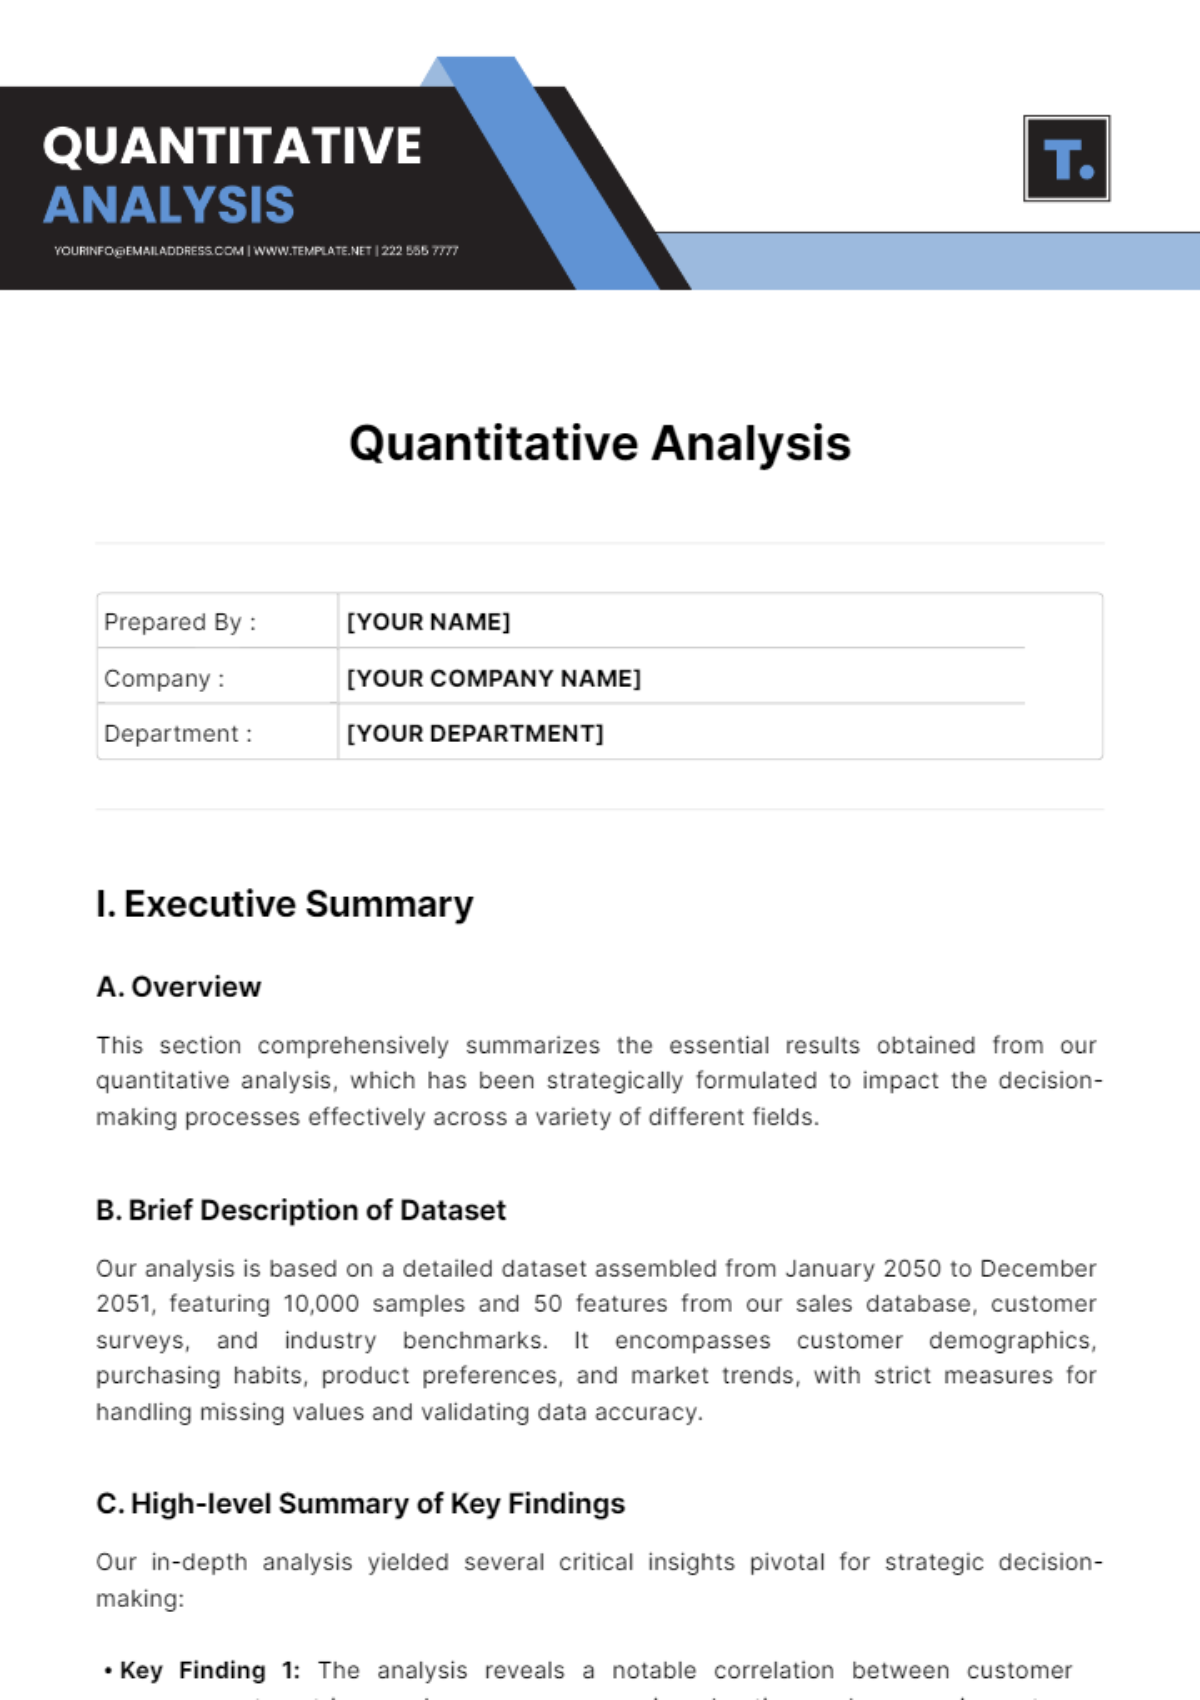 Quantitative Analysis Template